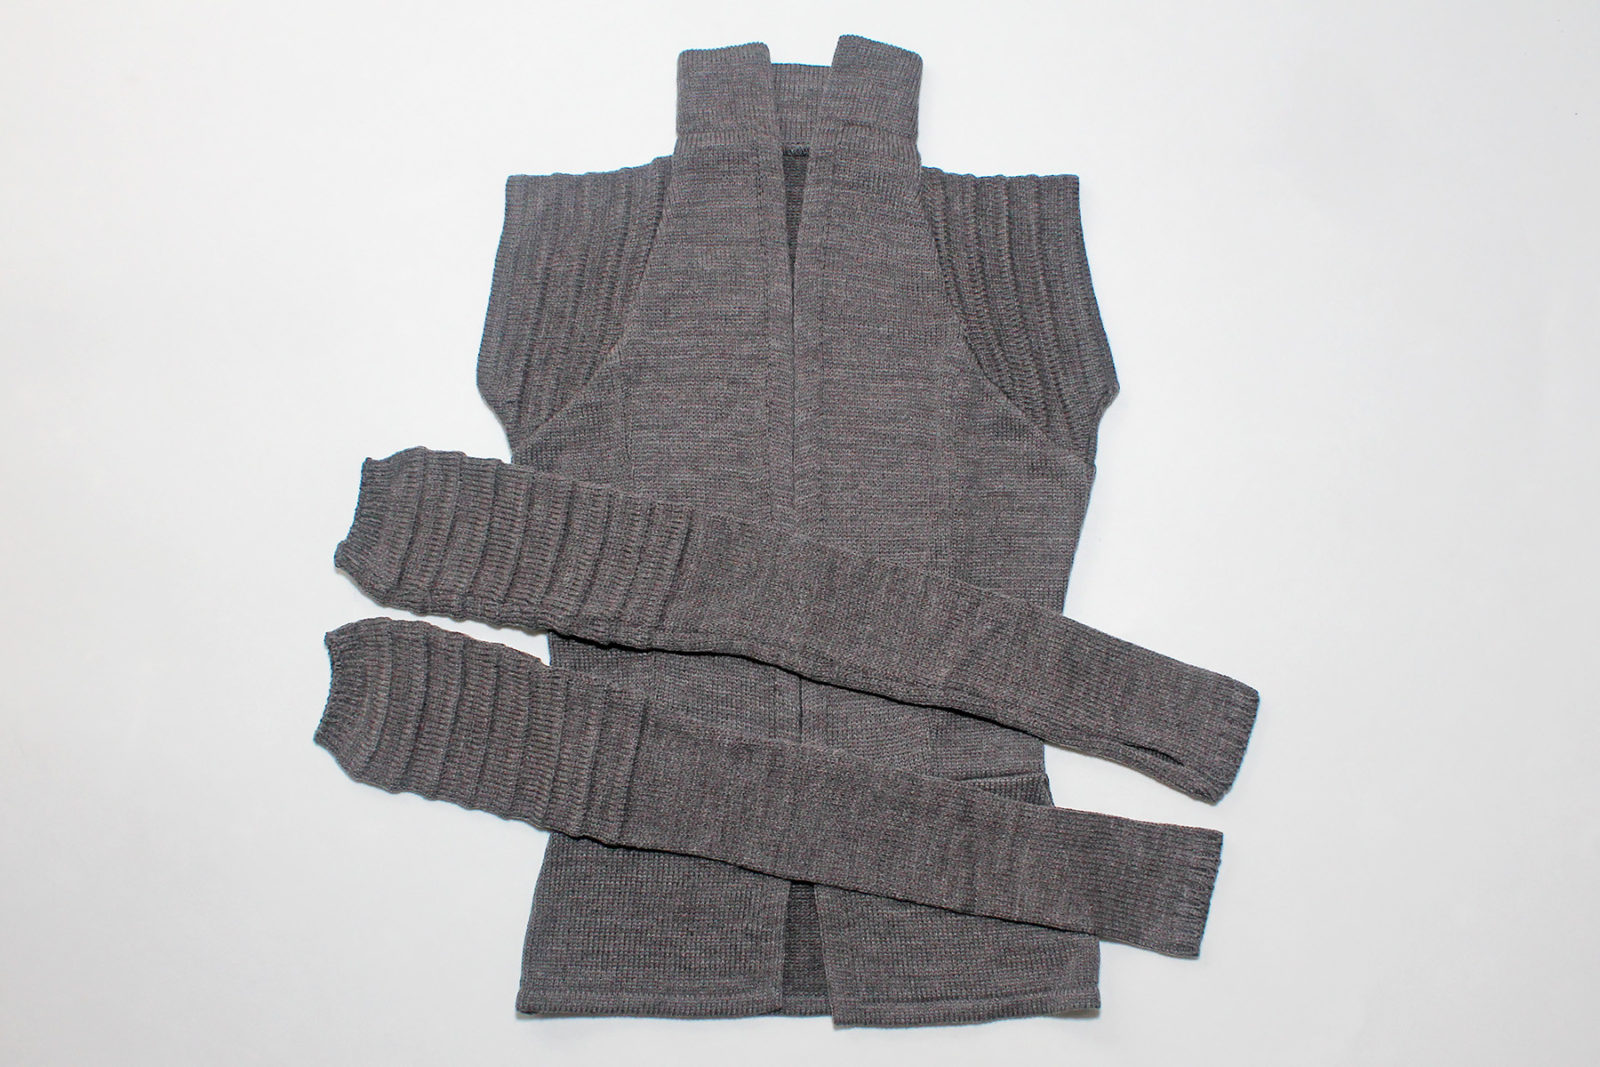 Review – Elhoffer Design knitted Rey vest